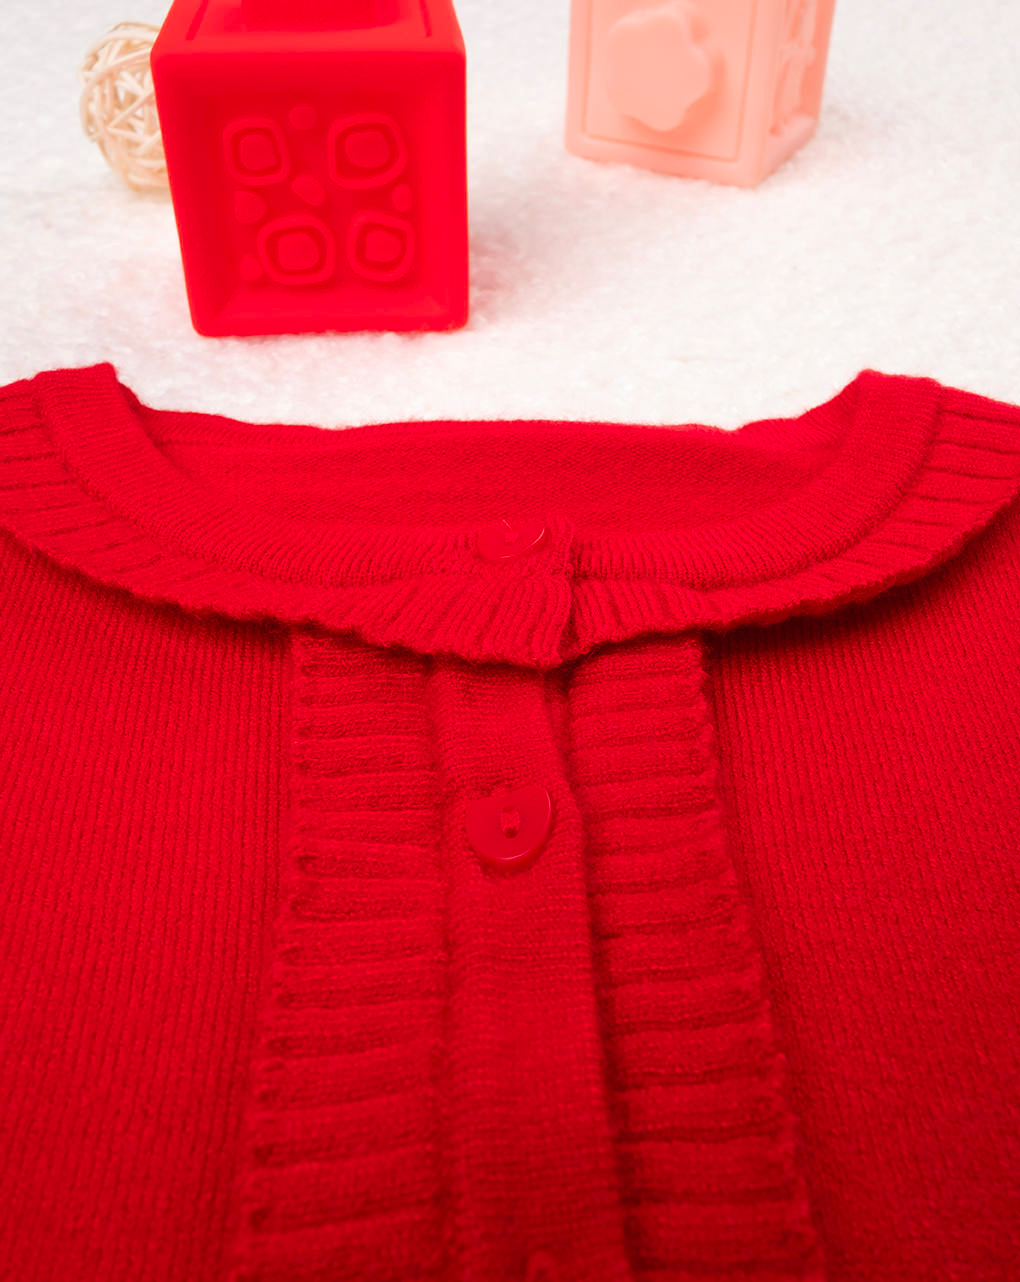 Cardigan tricot bimba rosso - Prénatal